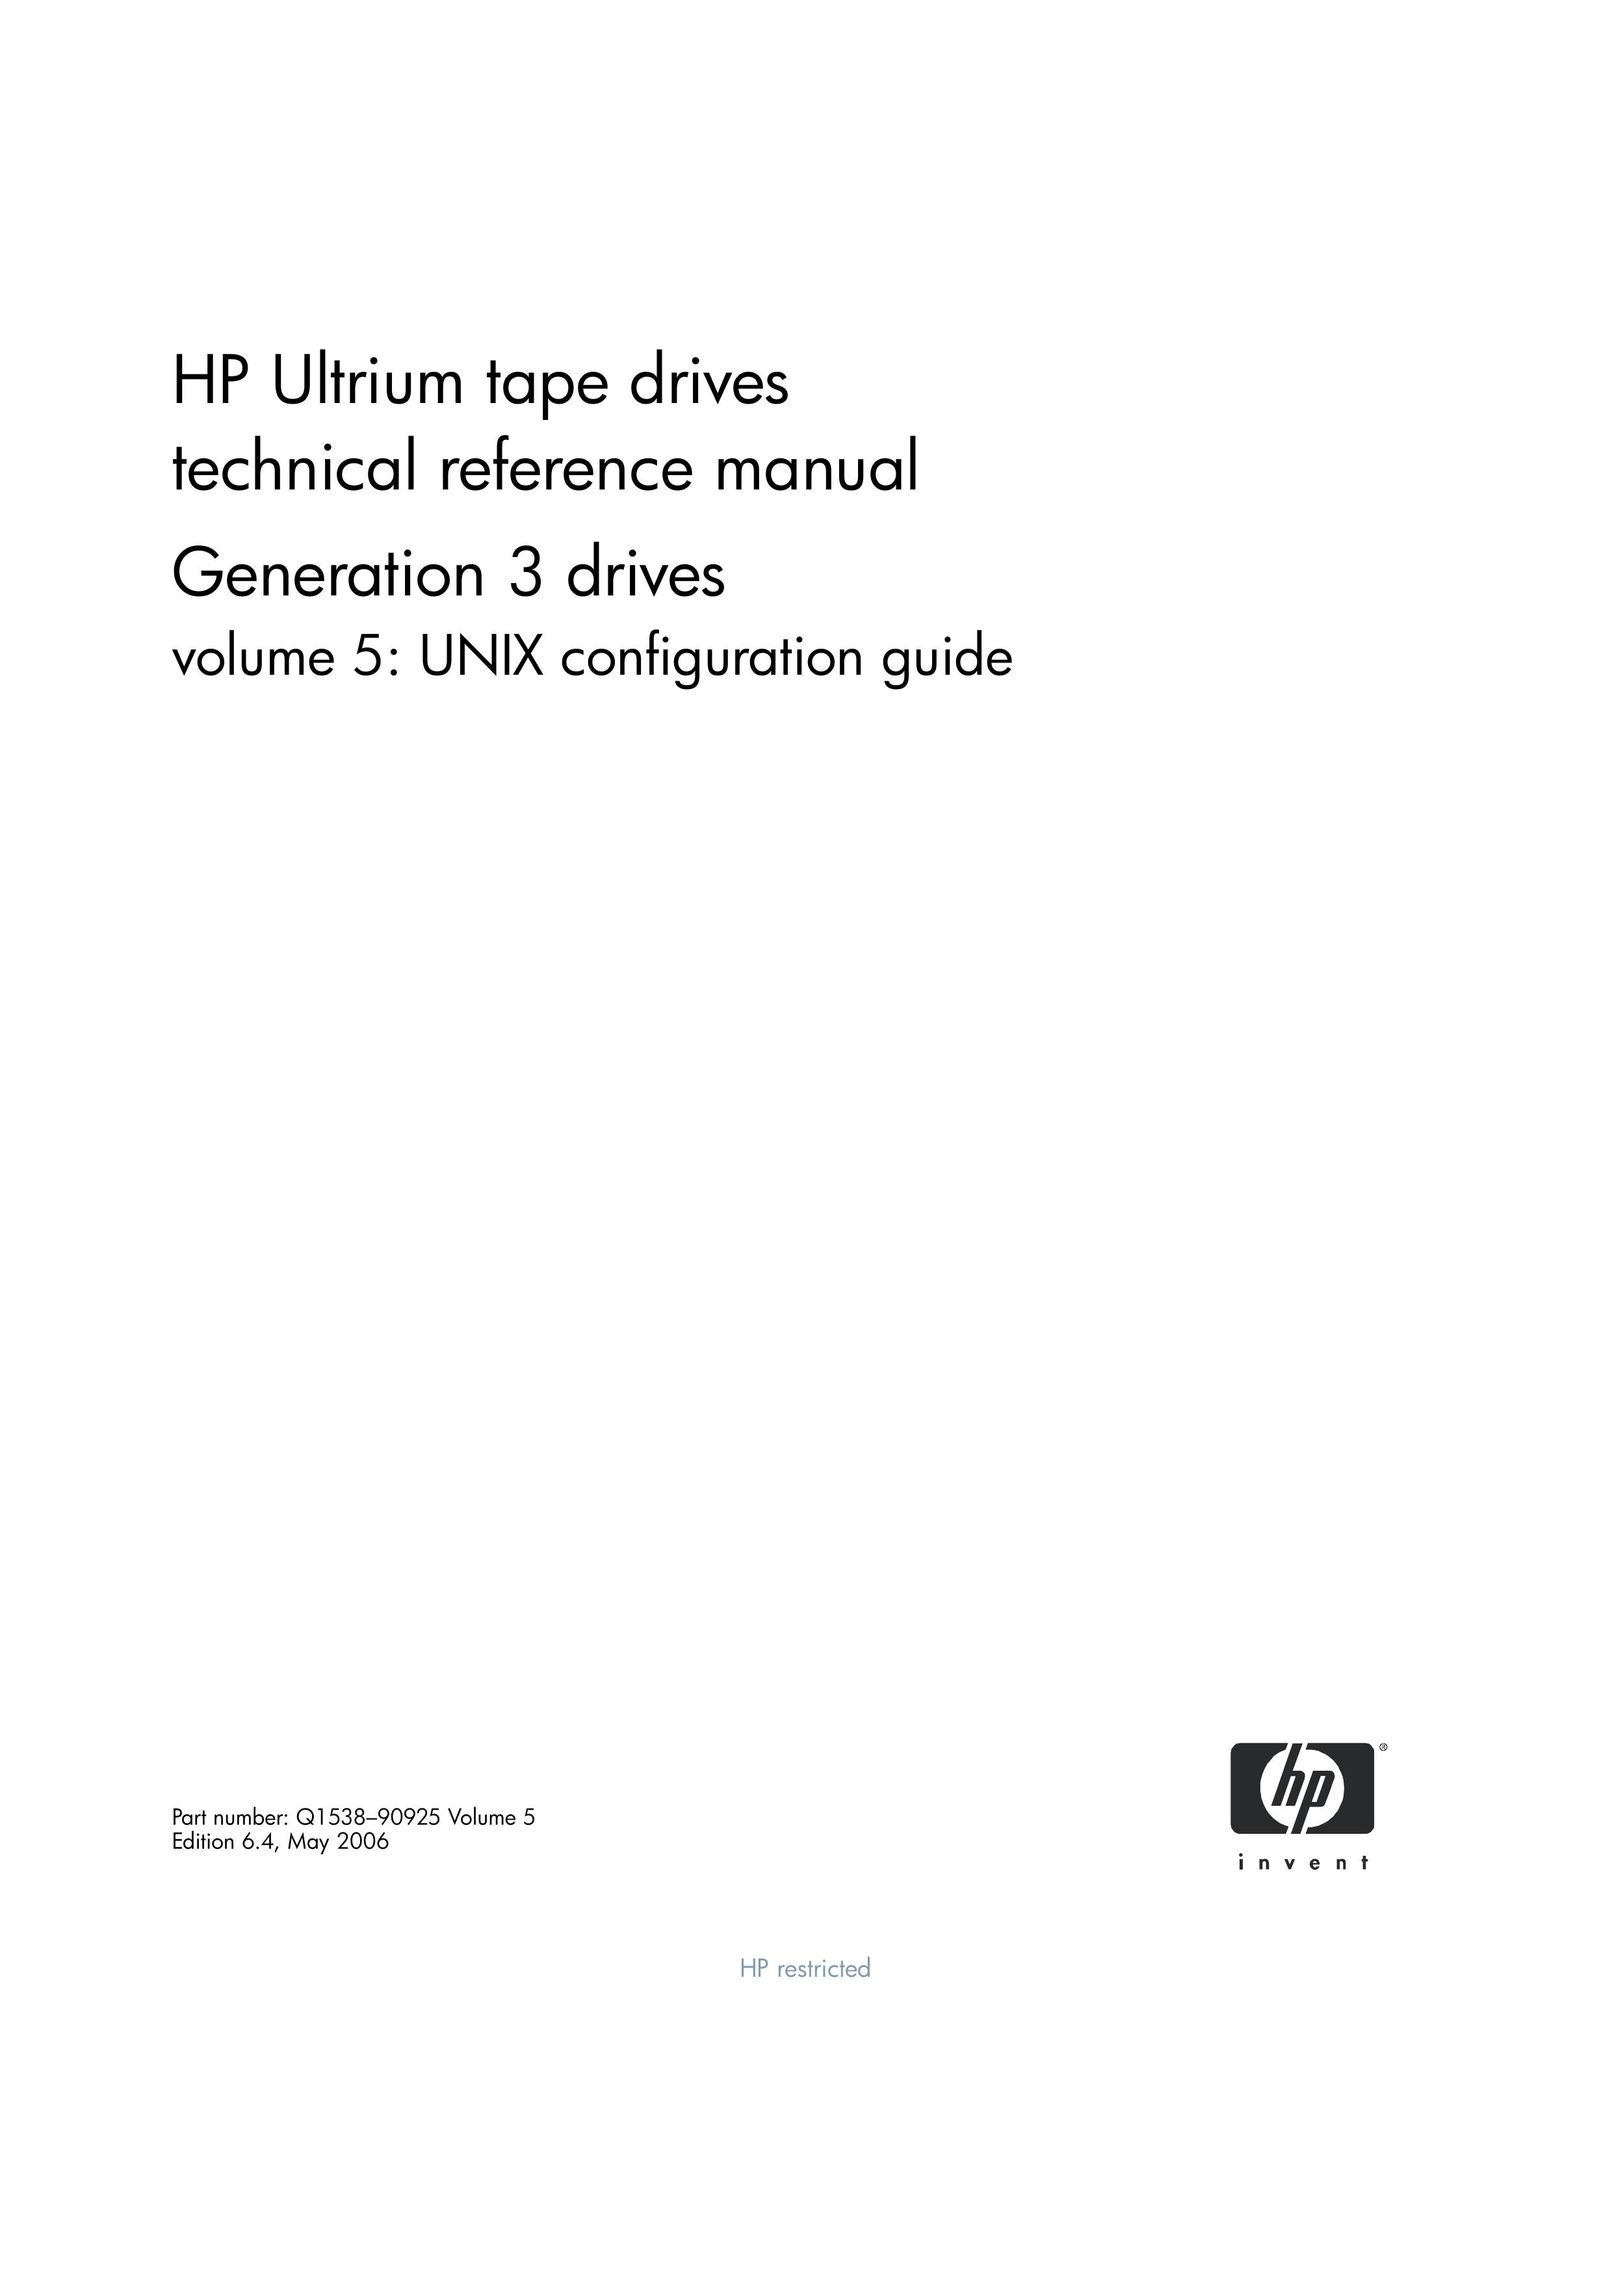 HP (Hewlett-Packard) Q1538-90925 Portable Media Storage User Manual